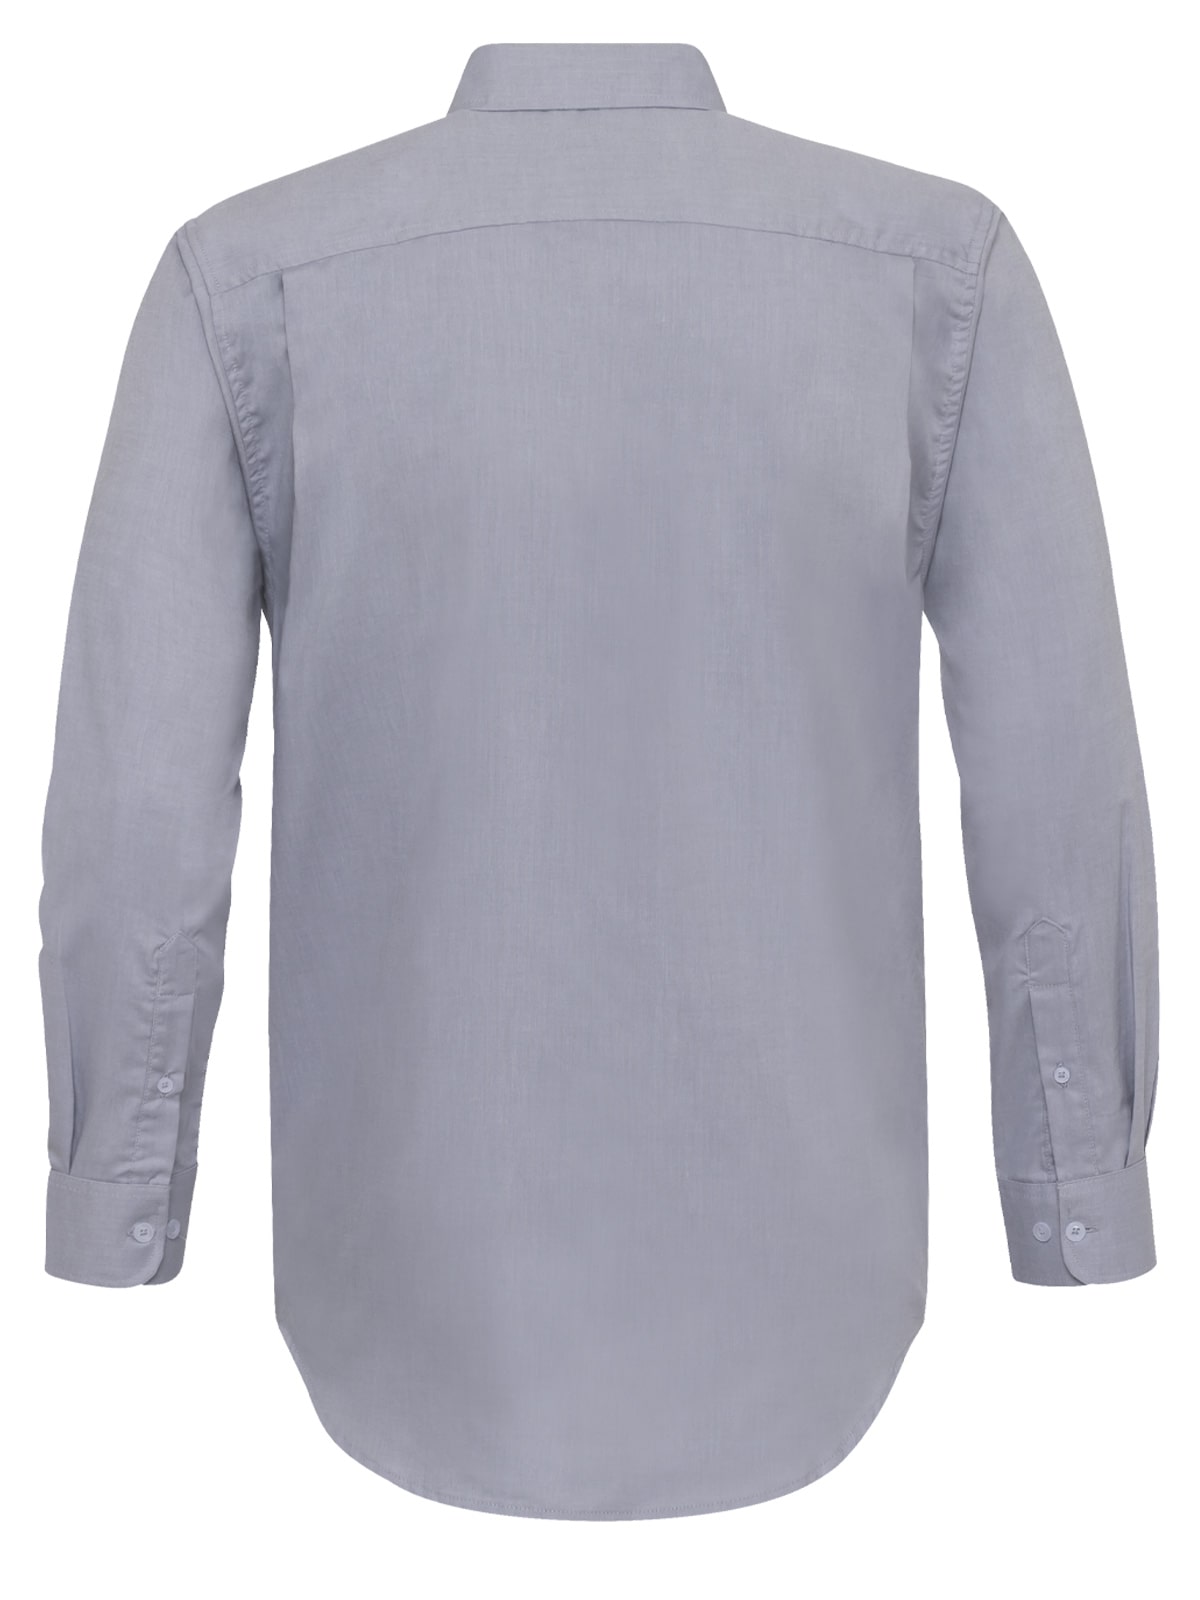 Camisas oxford color gris